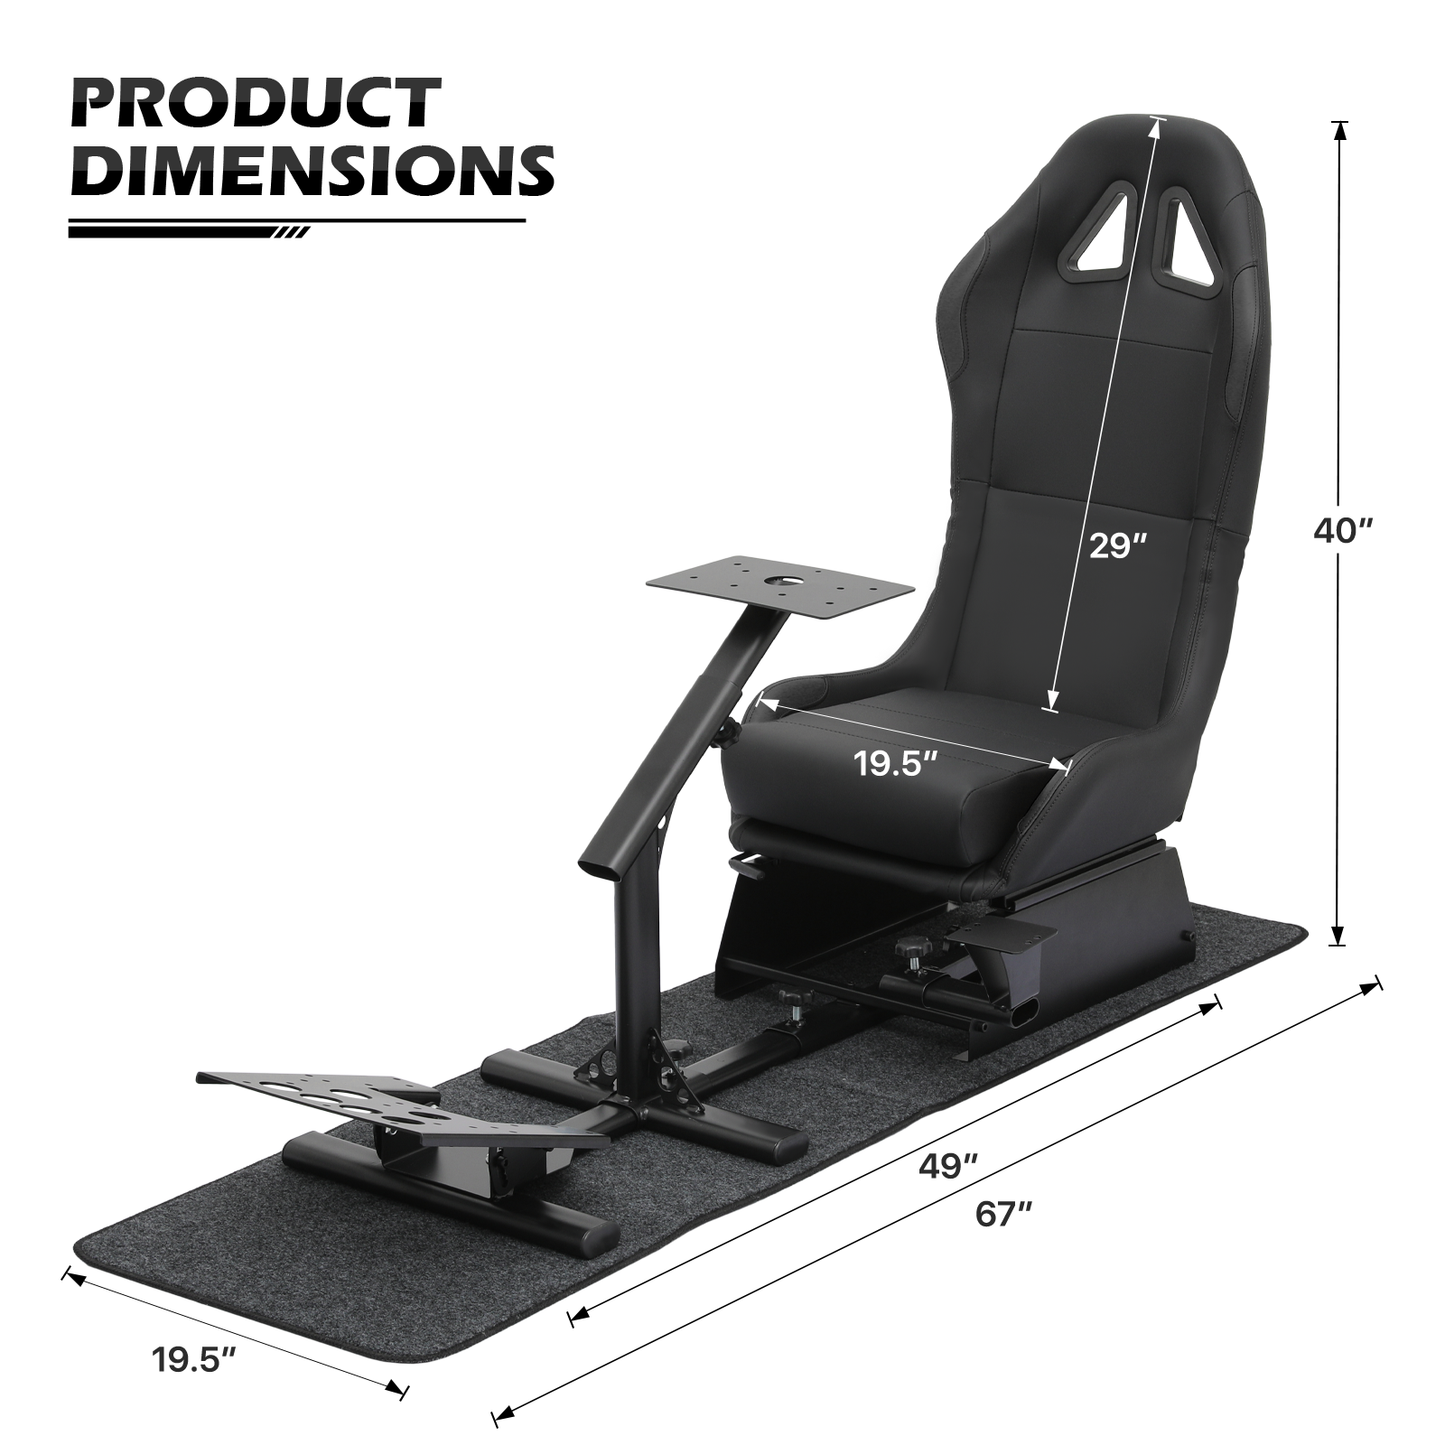 Racing Simulator Cockpi - Adjustable Gaming Seat - Black